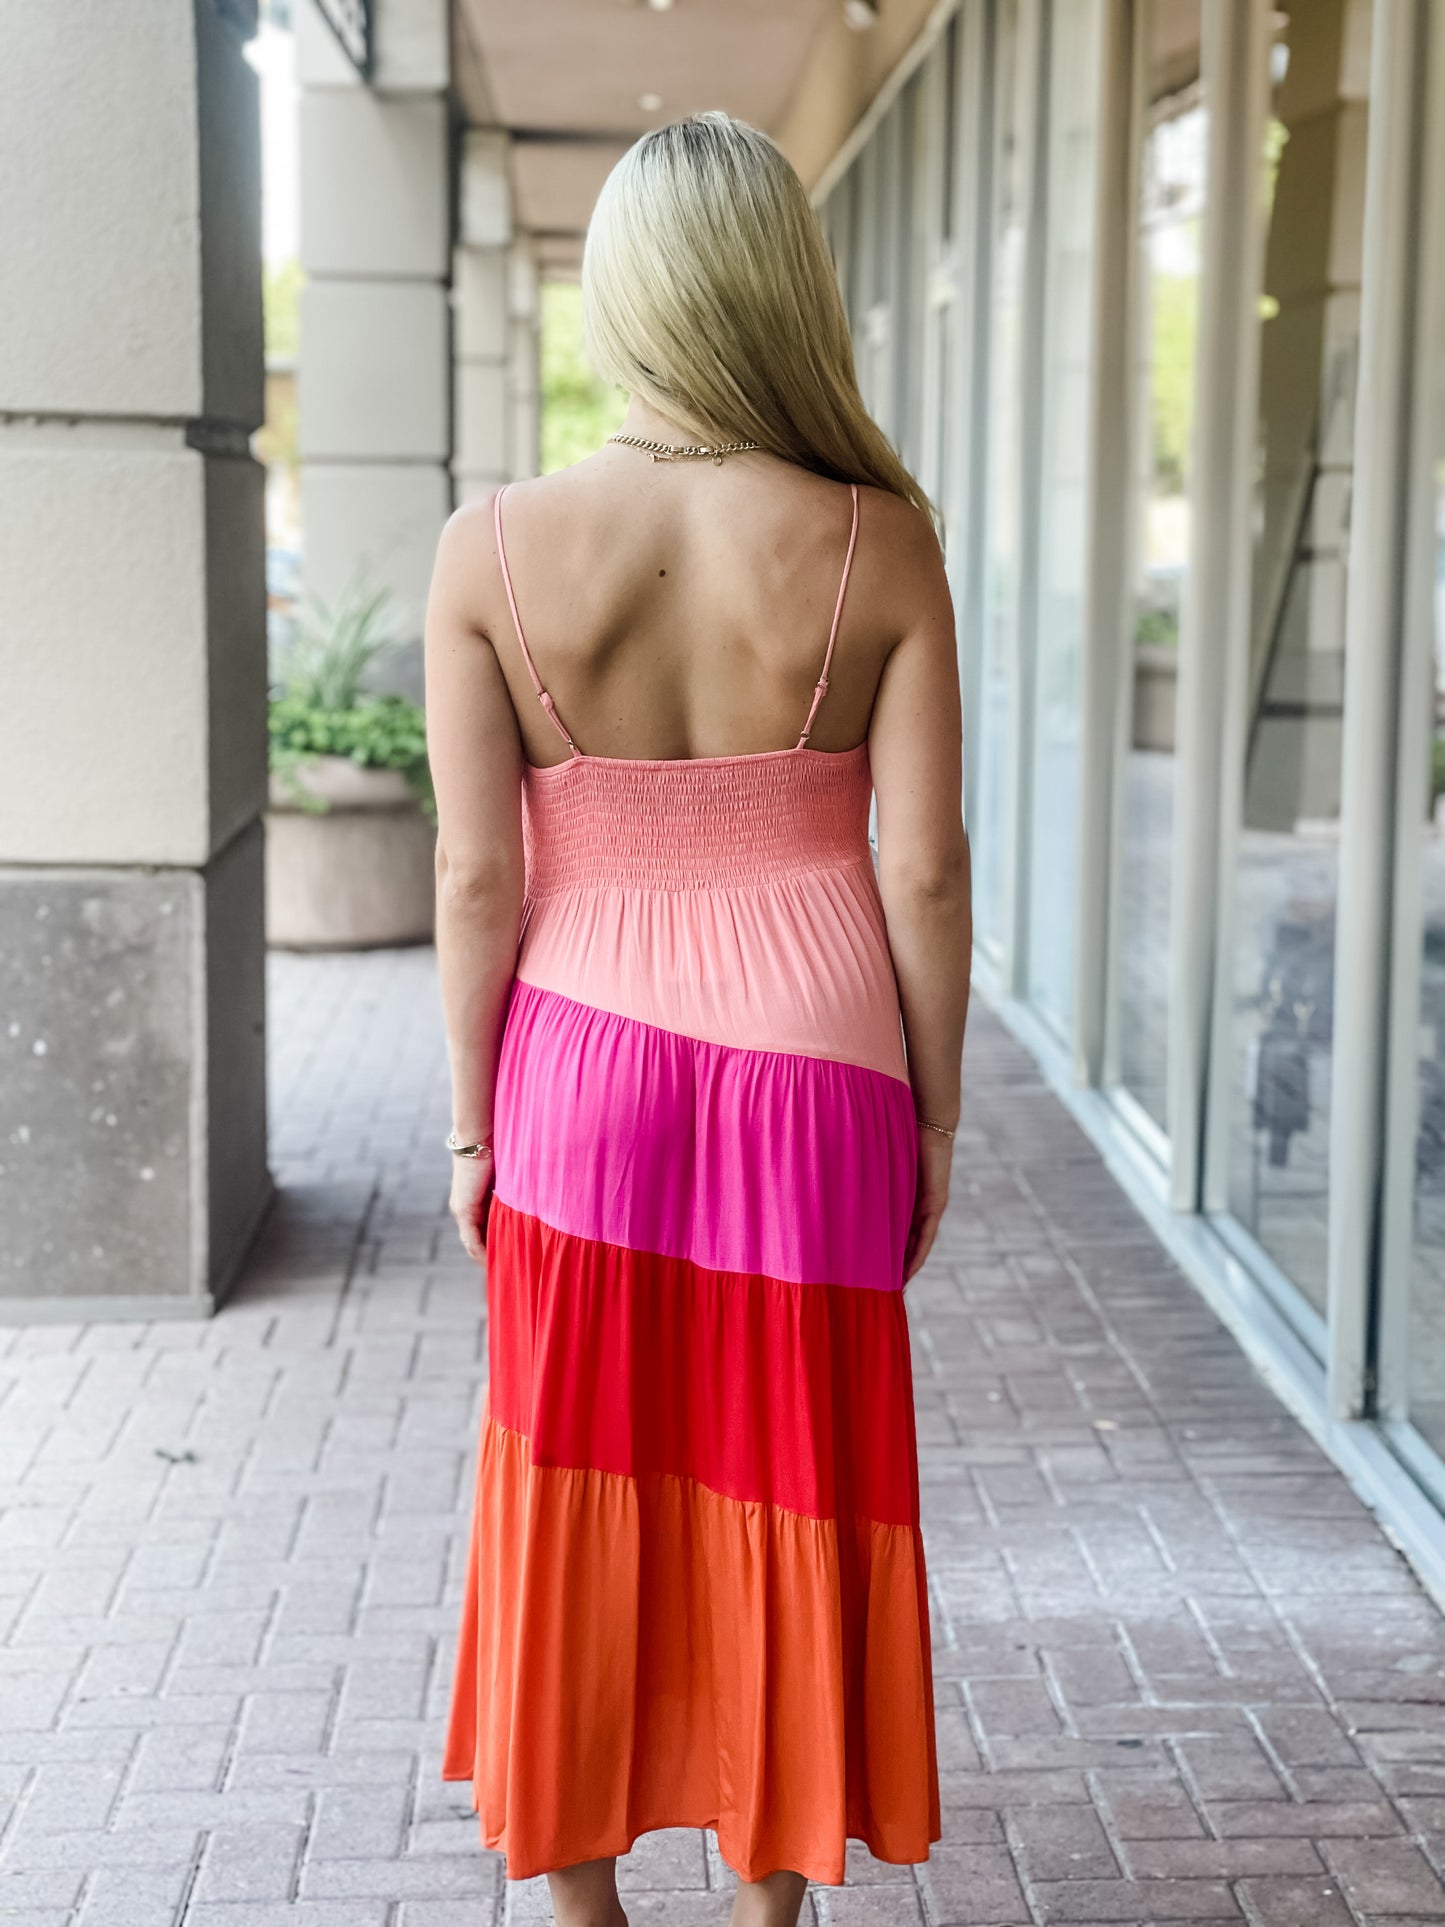 Lucy Paris Positano Color Block Dress  - Pink/Orange